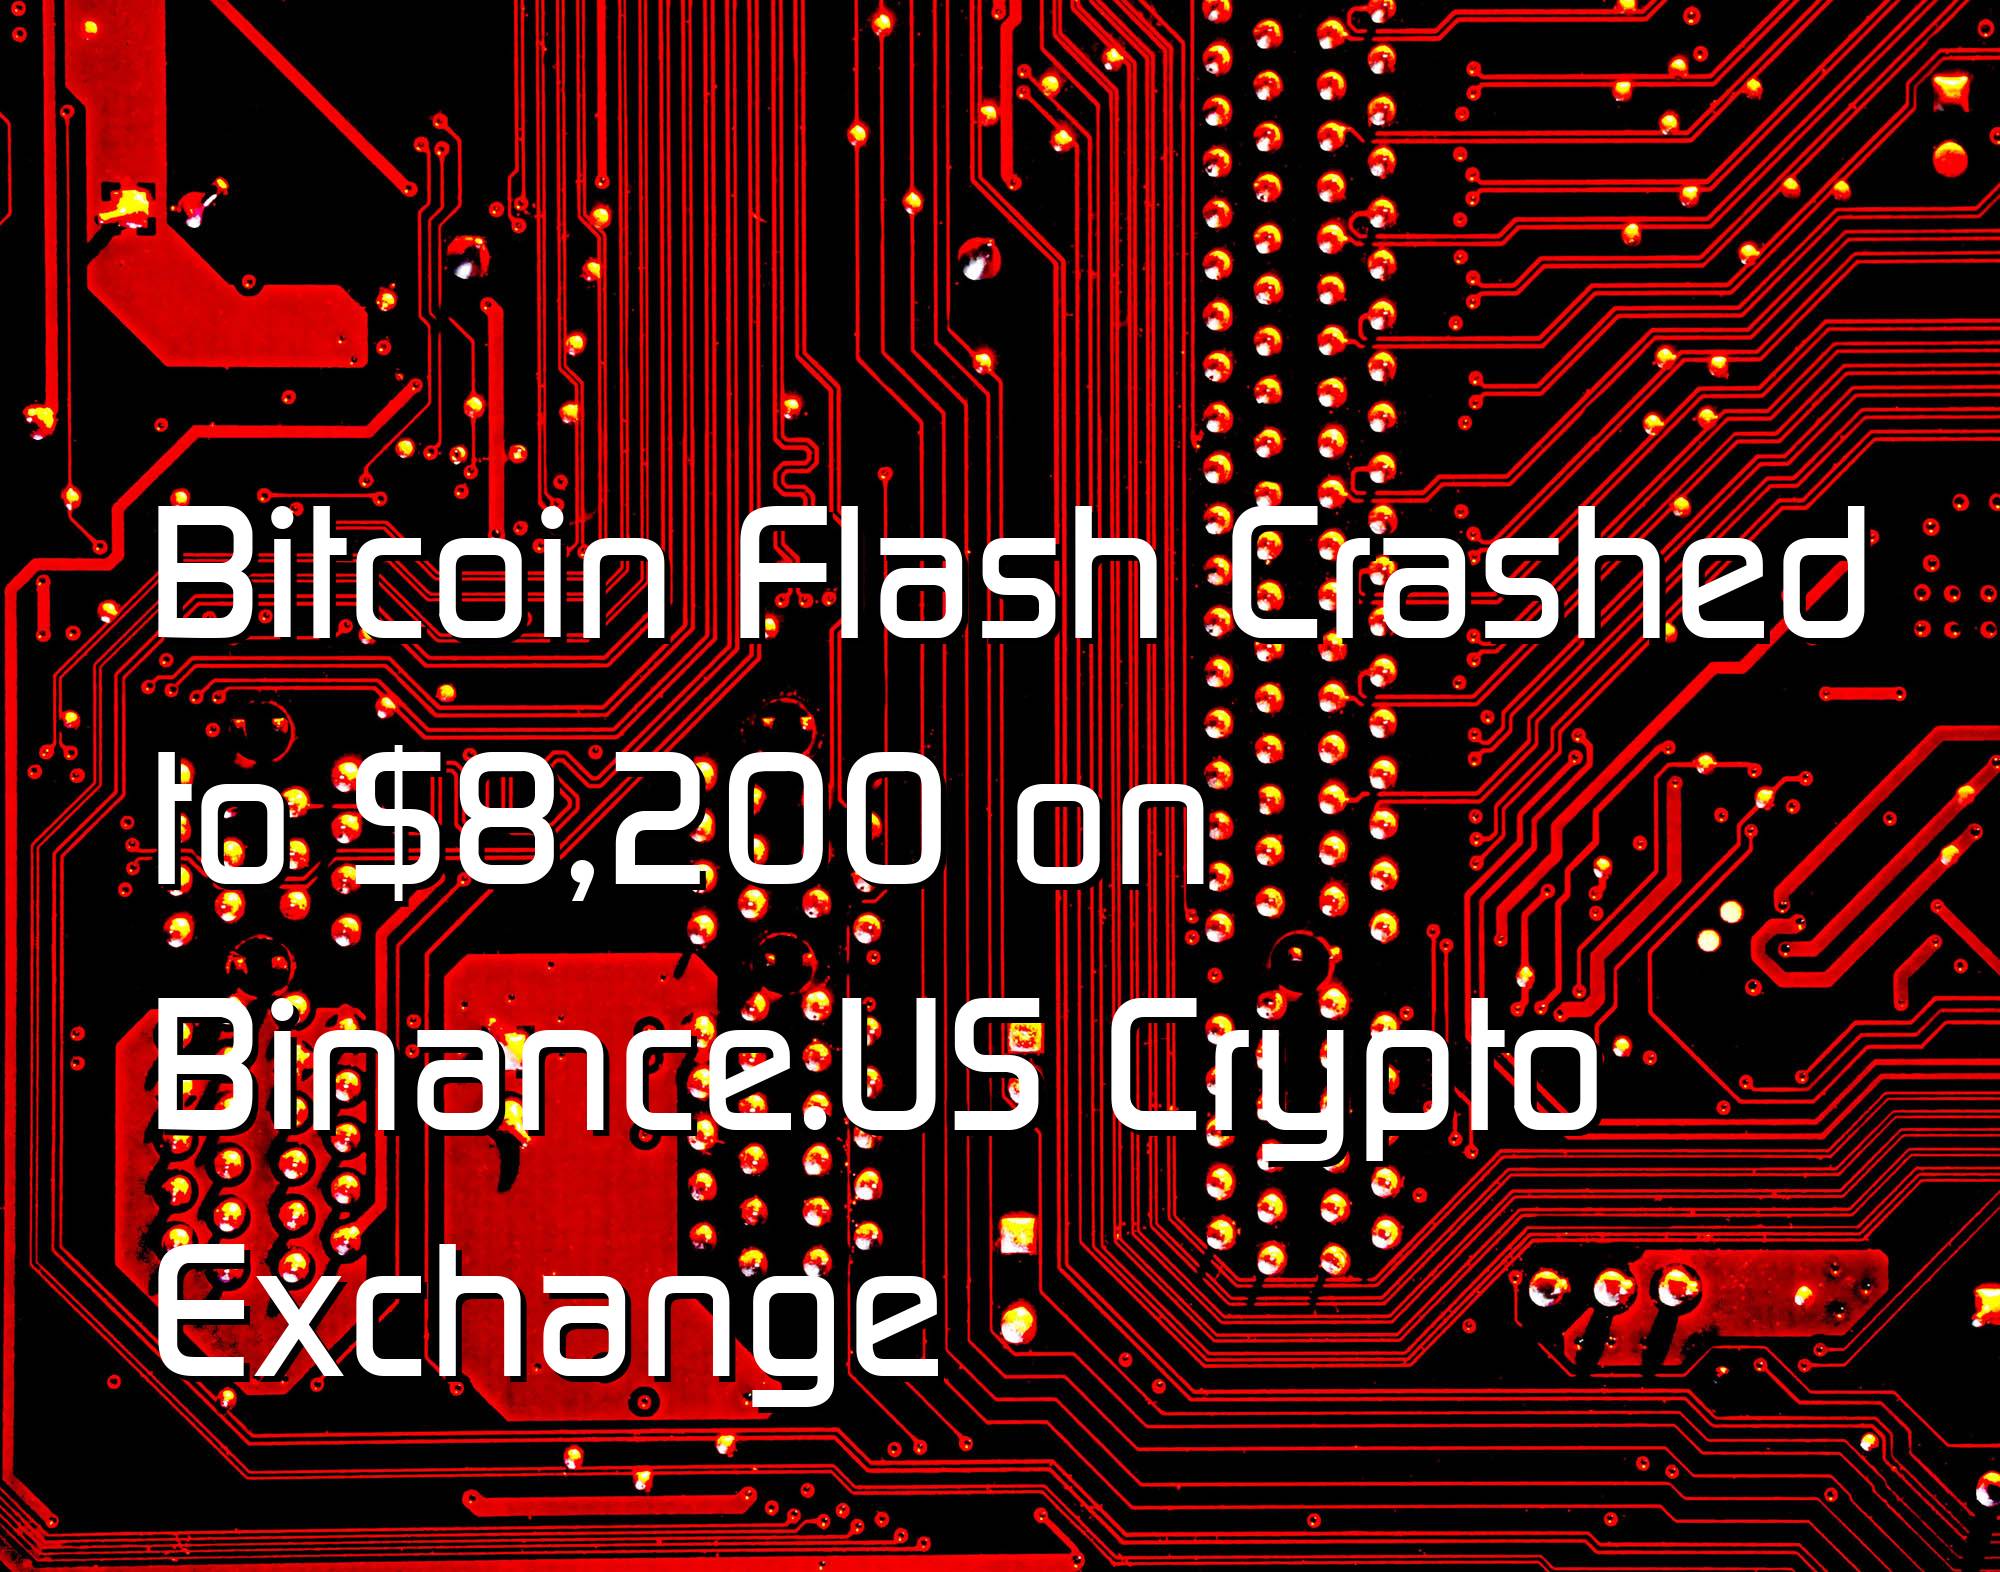 @$63305.54 Bitcoin Flash Crashed to $8,200 on Binance.US Crypto Exchange